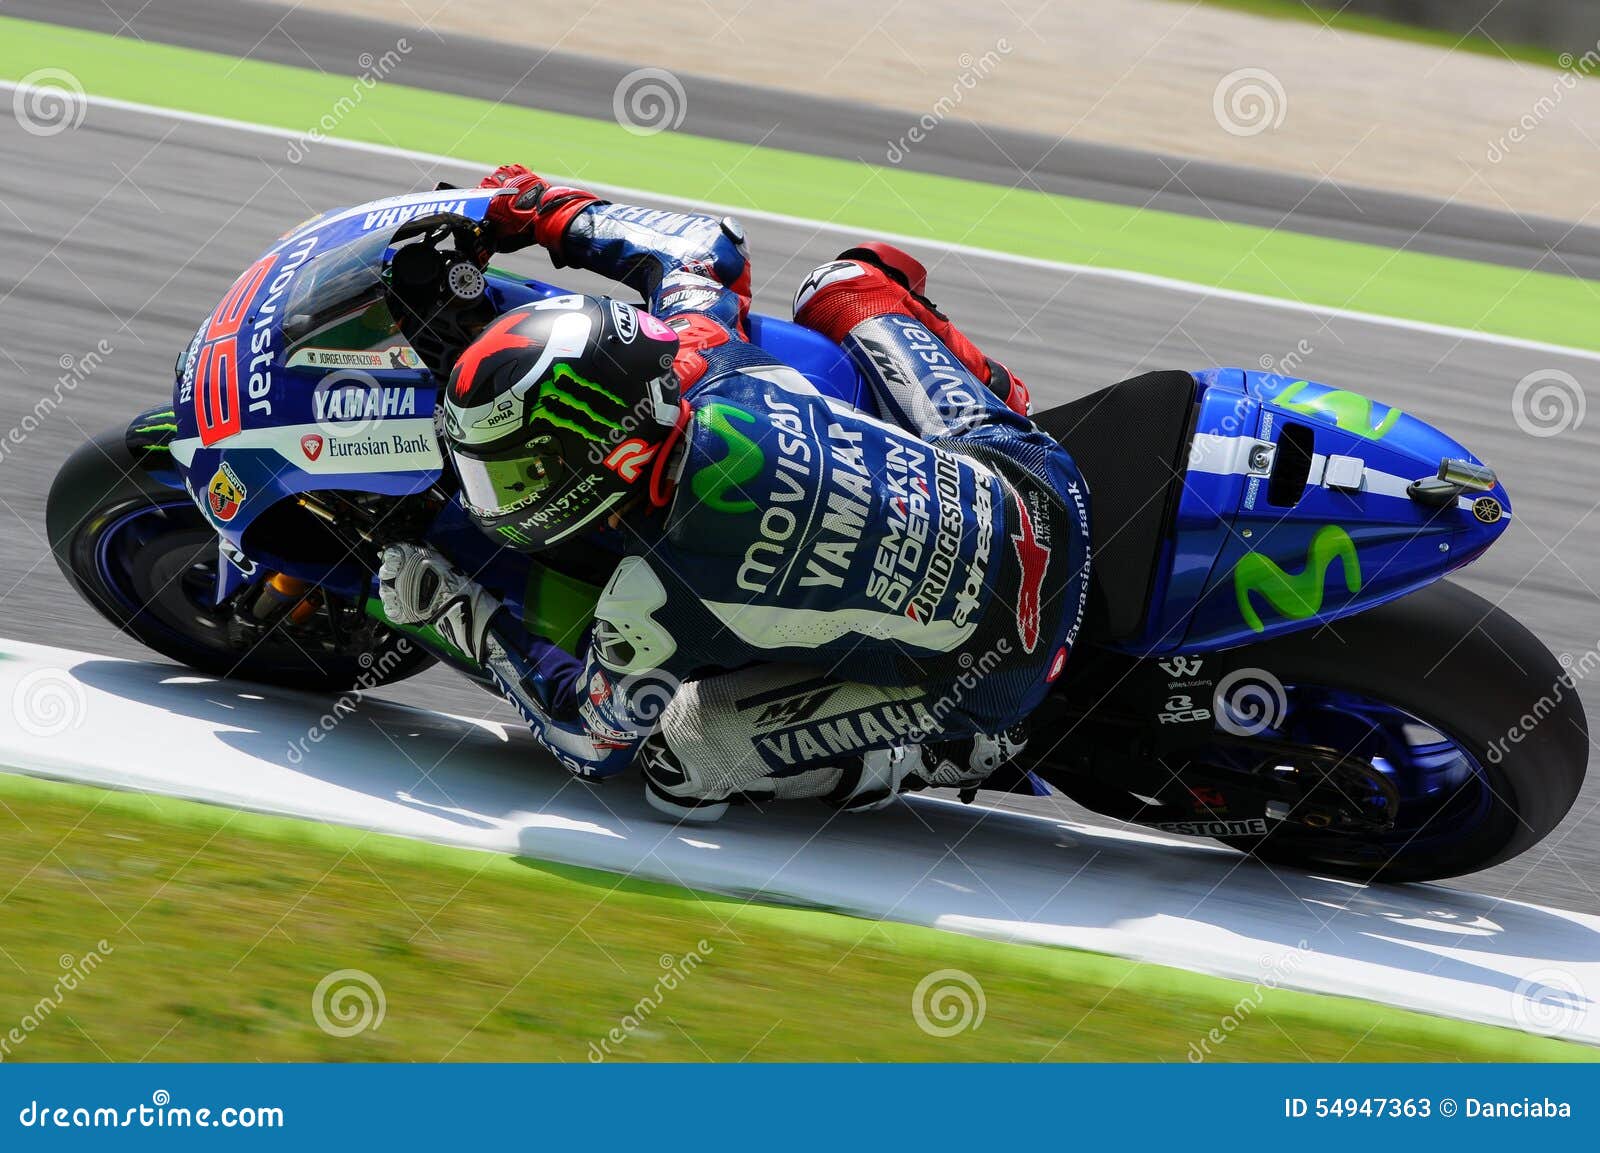 Jorge Lorenzo Movistar Yamaha Motogp At Mugello 15 Editorial Stock Photo Image Of Team Motogp